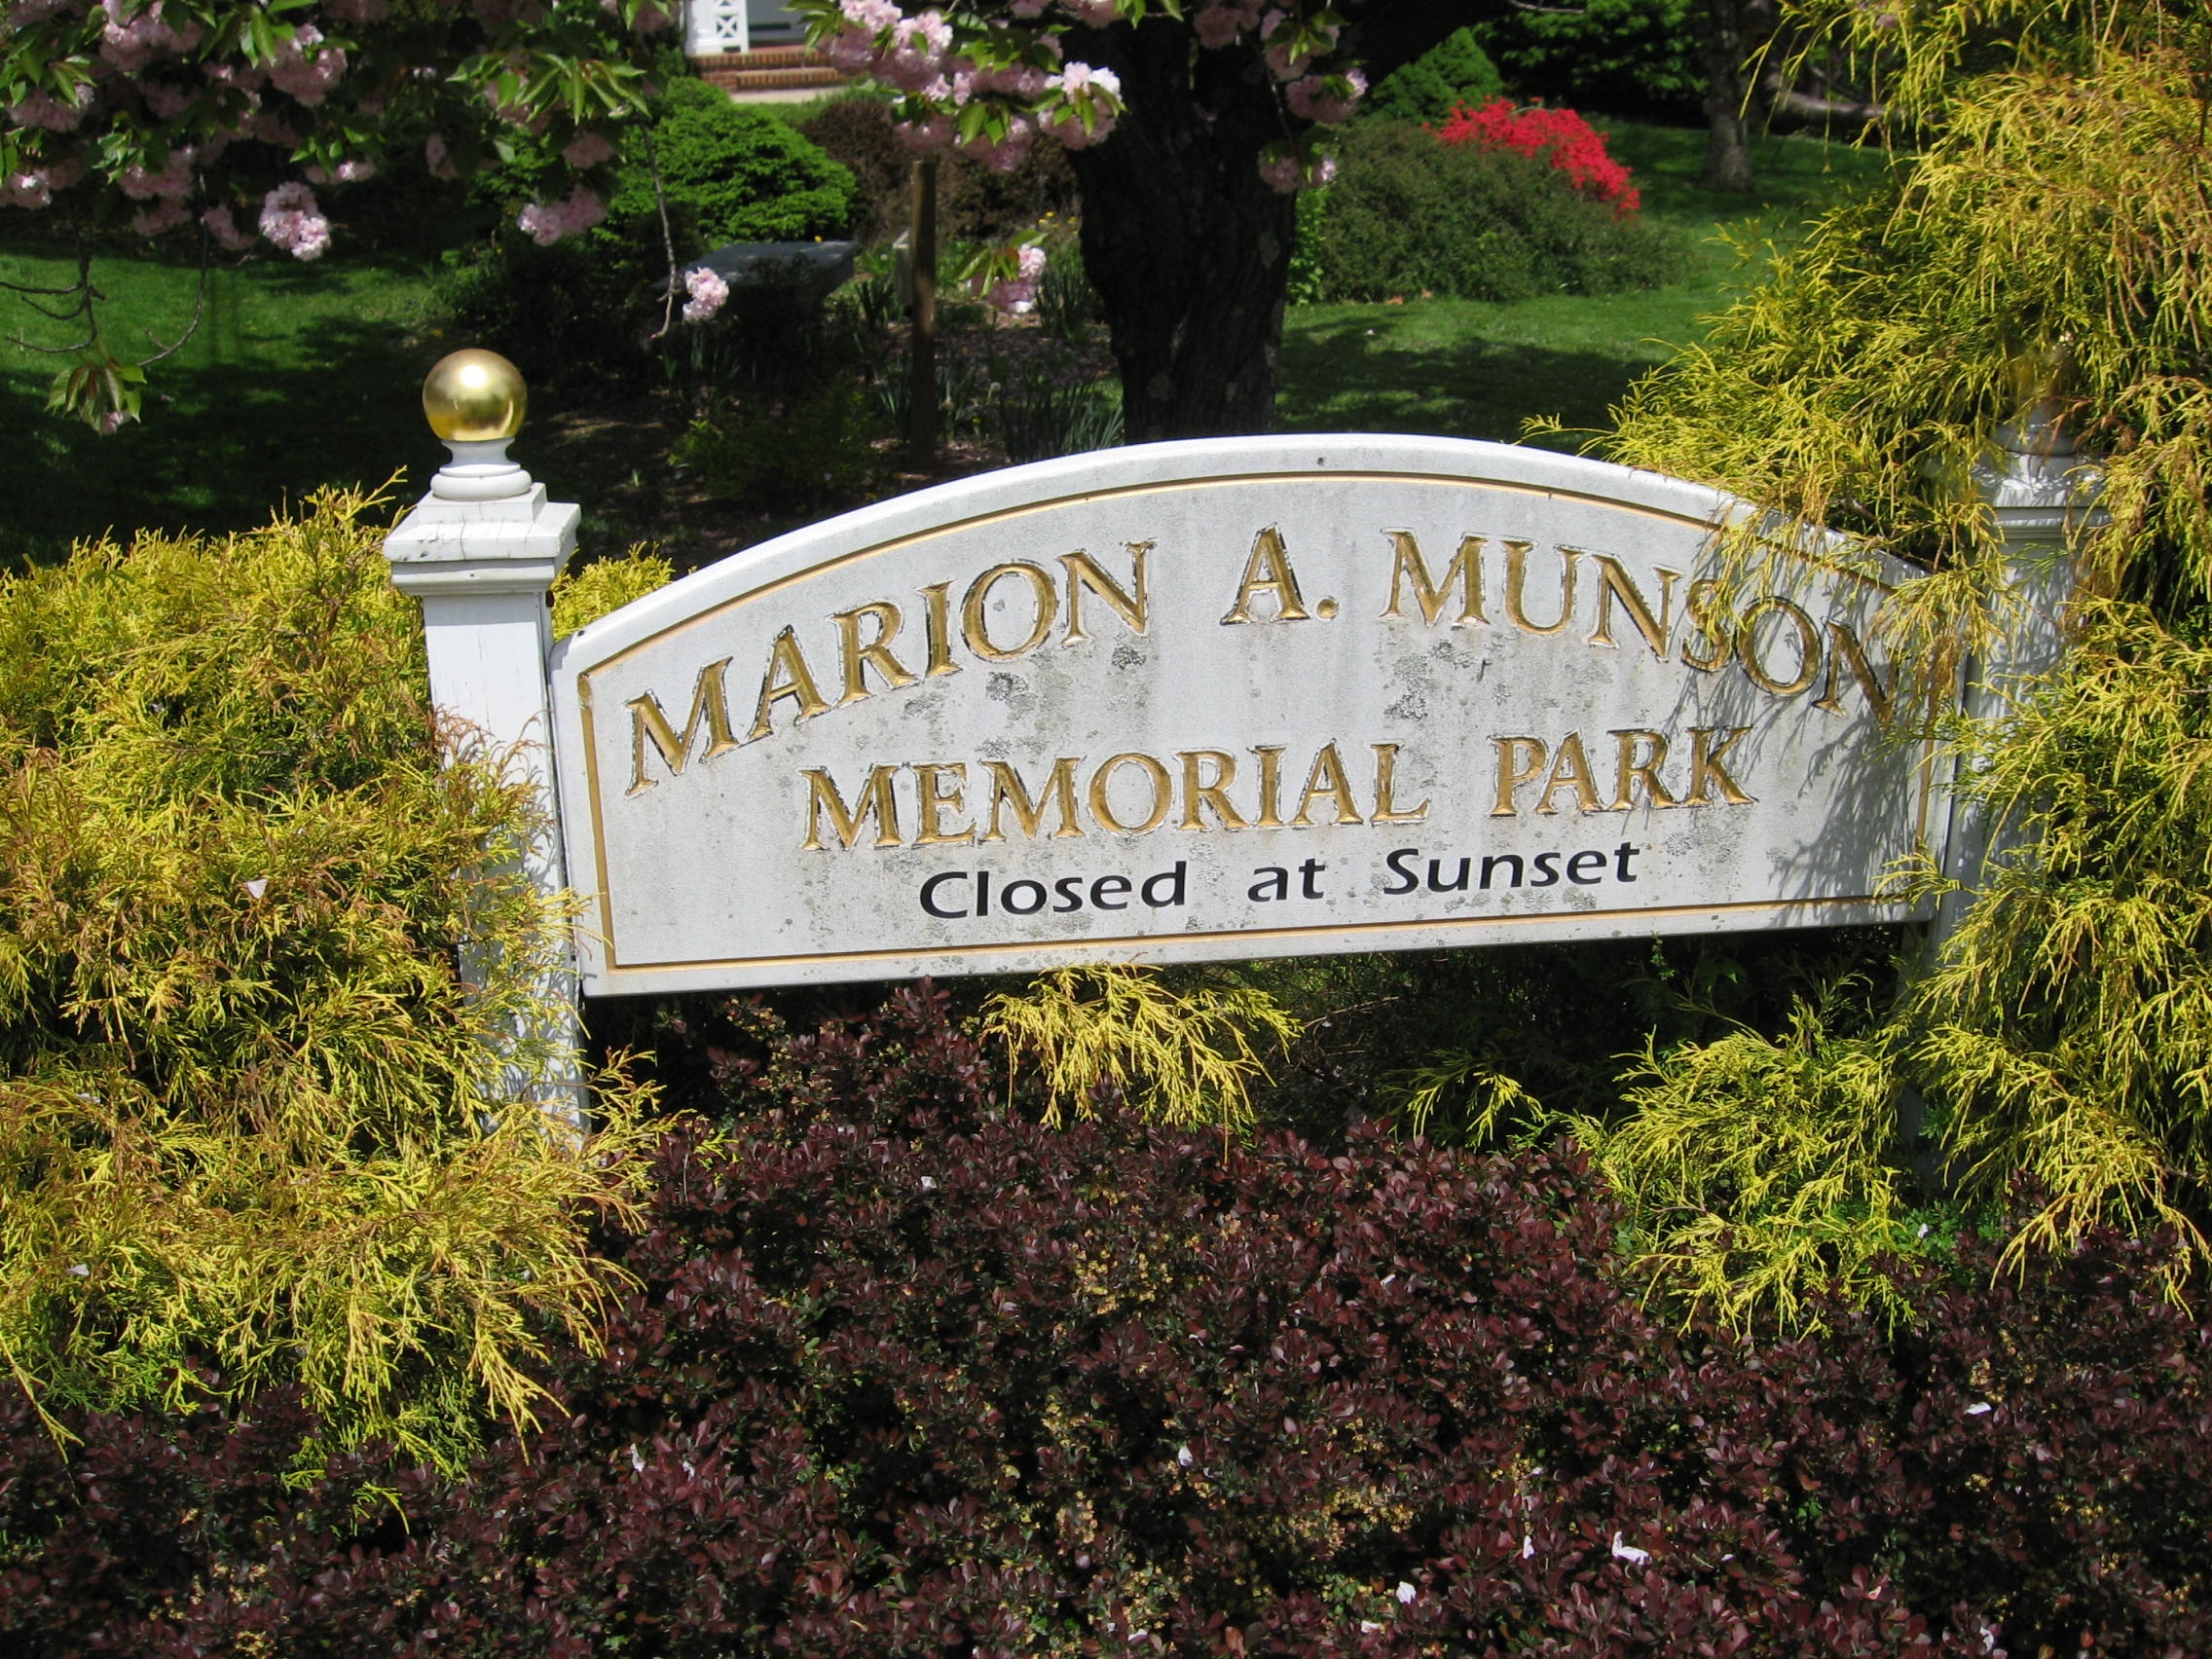 Marion A. Munson Memorial Park